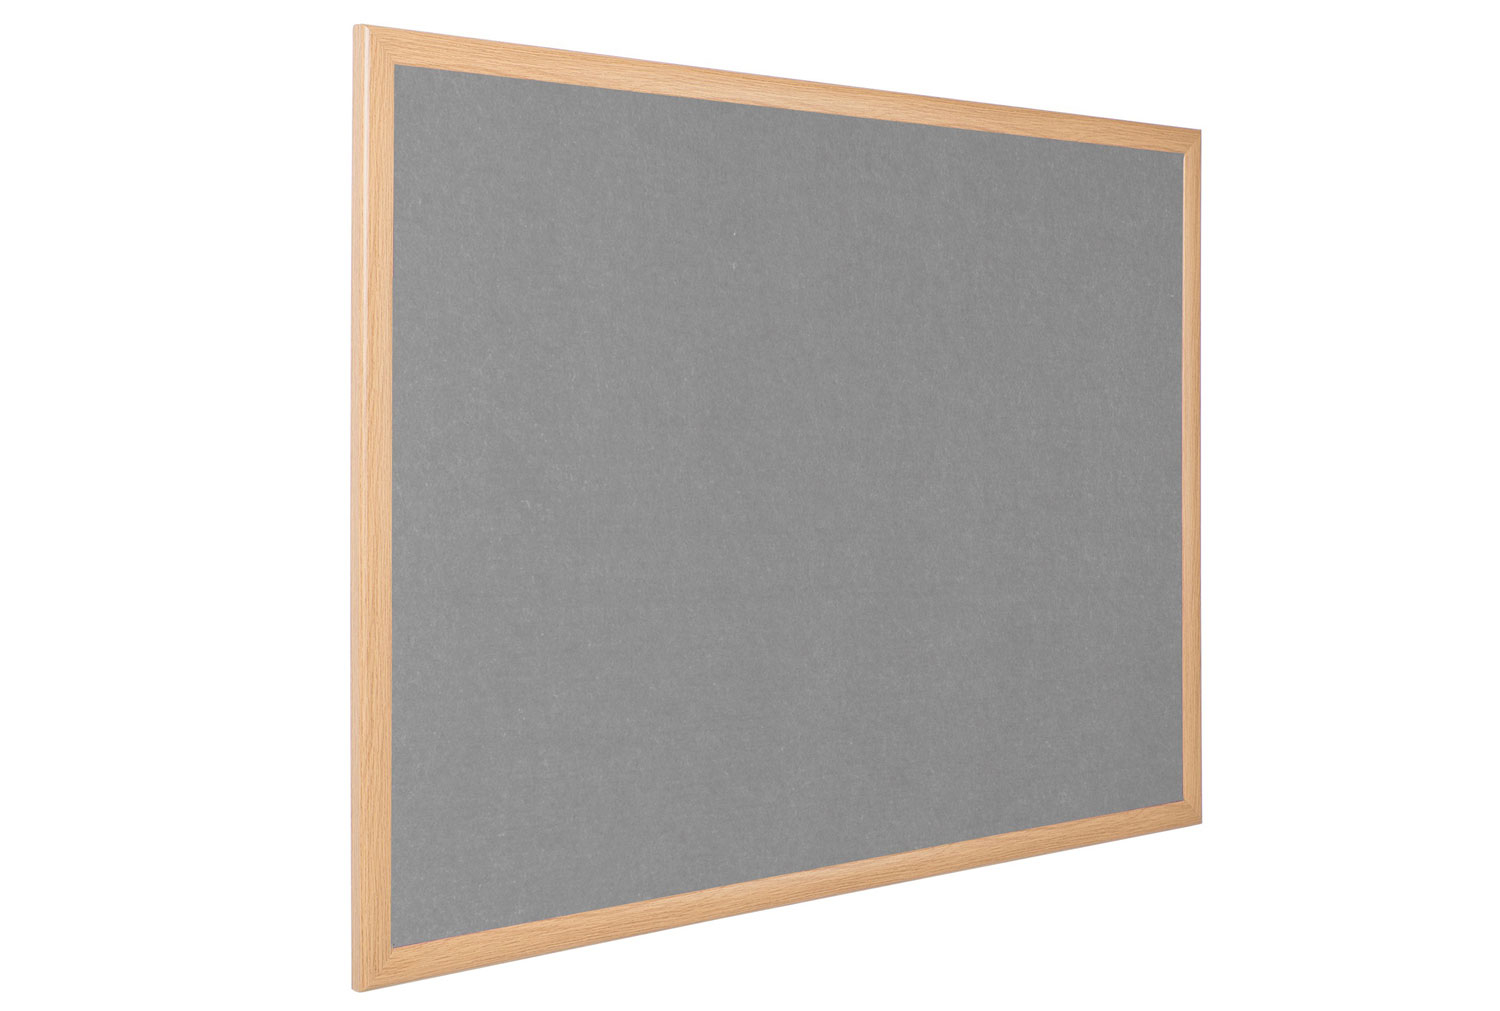 Eco-Colour Light Oak Noticeboard, 90wx60h (cm), Oak Frame/ Grey